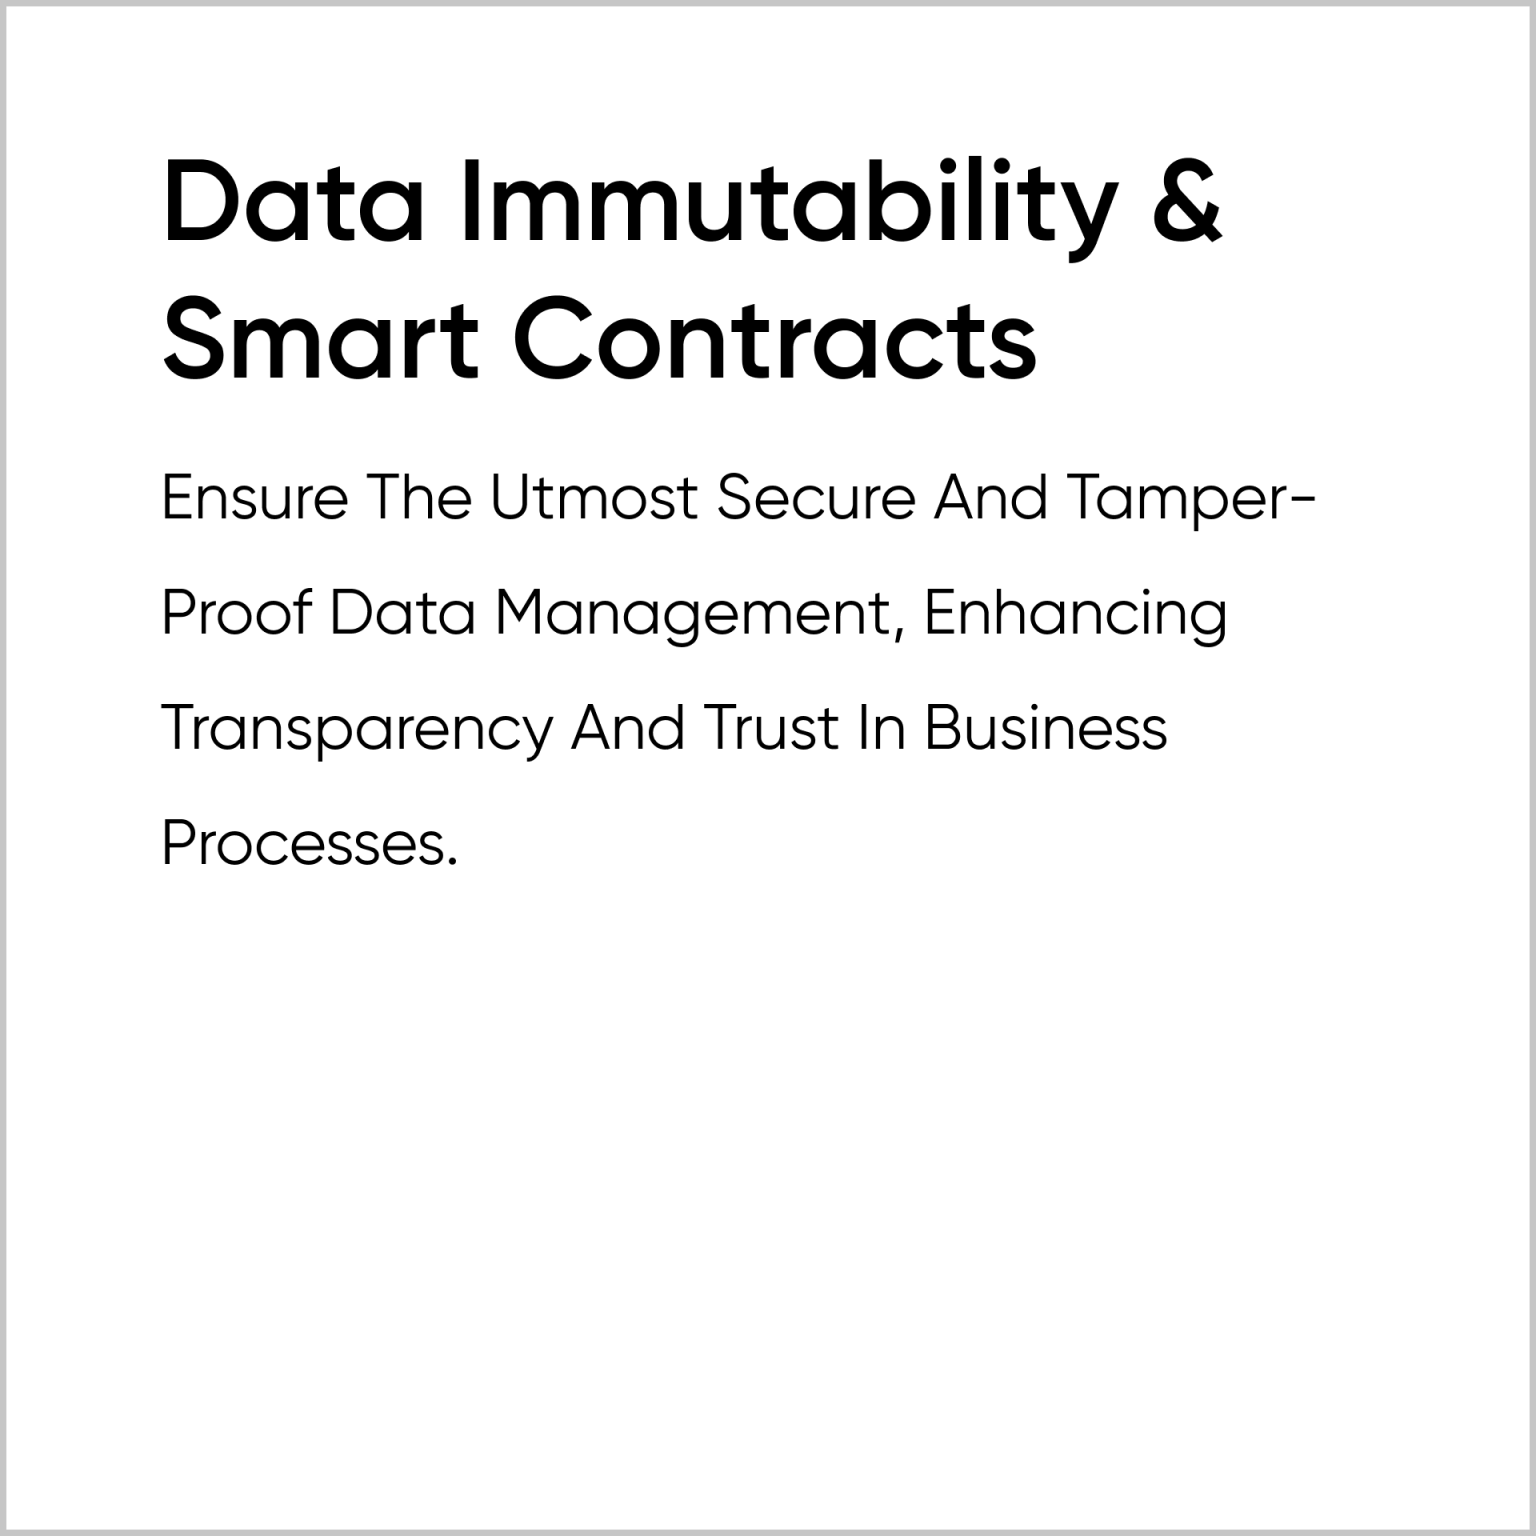 Data Immutability & Smart Contracts